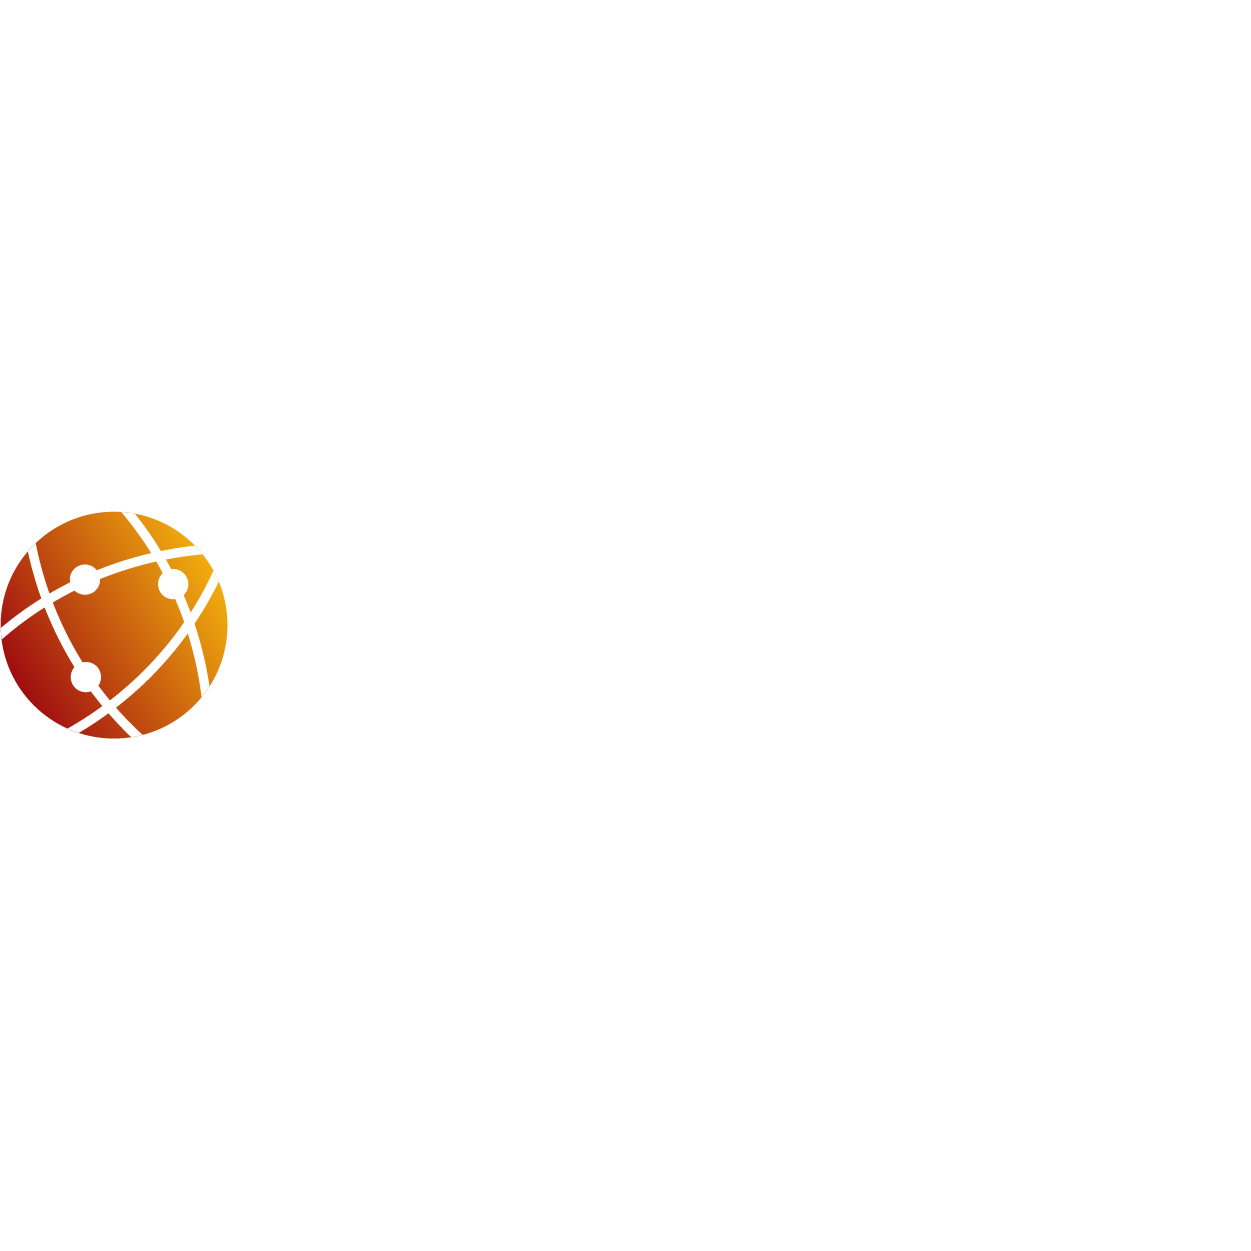 Publisher Remundo webinars